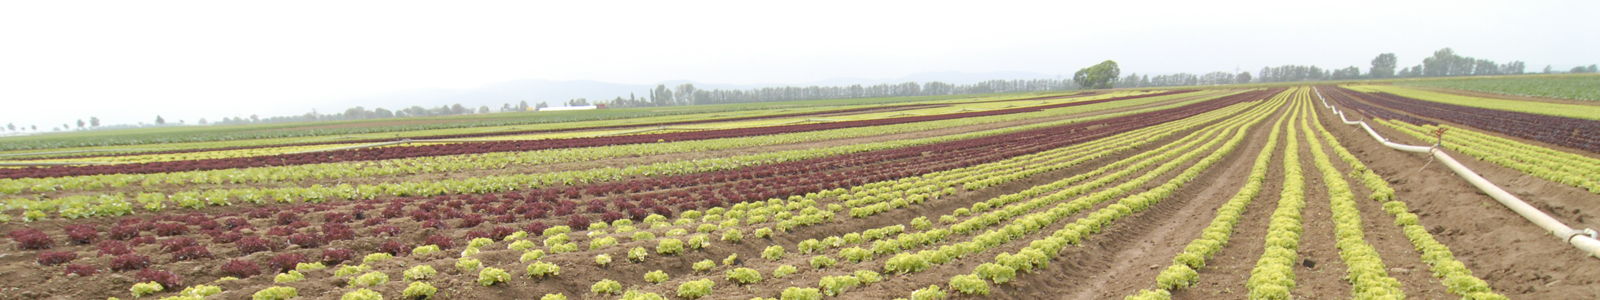 Salatanbau im Feld ©DLR